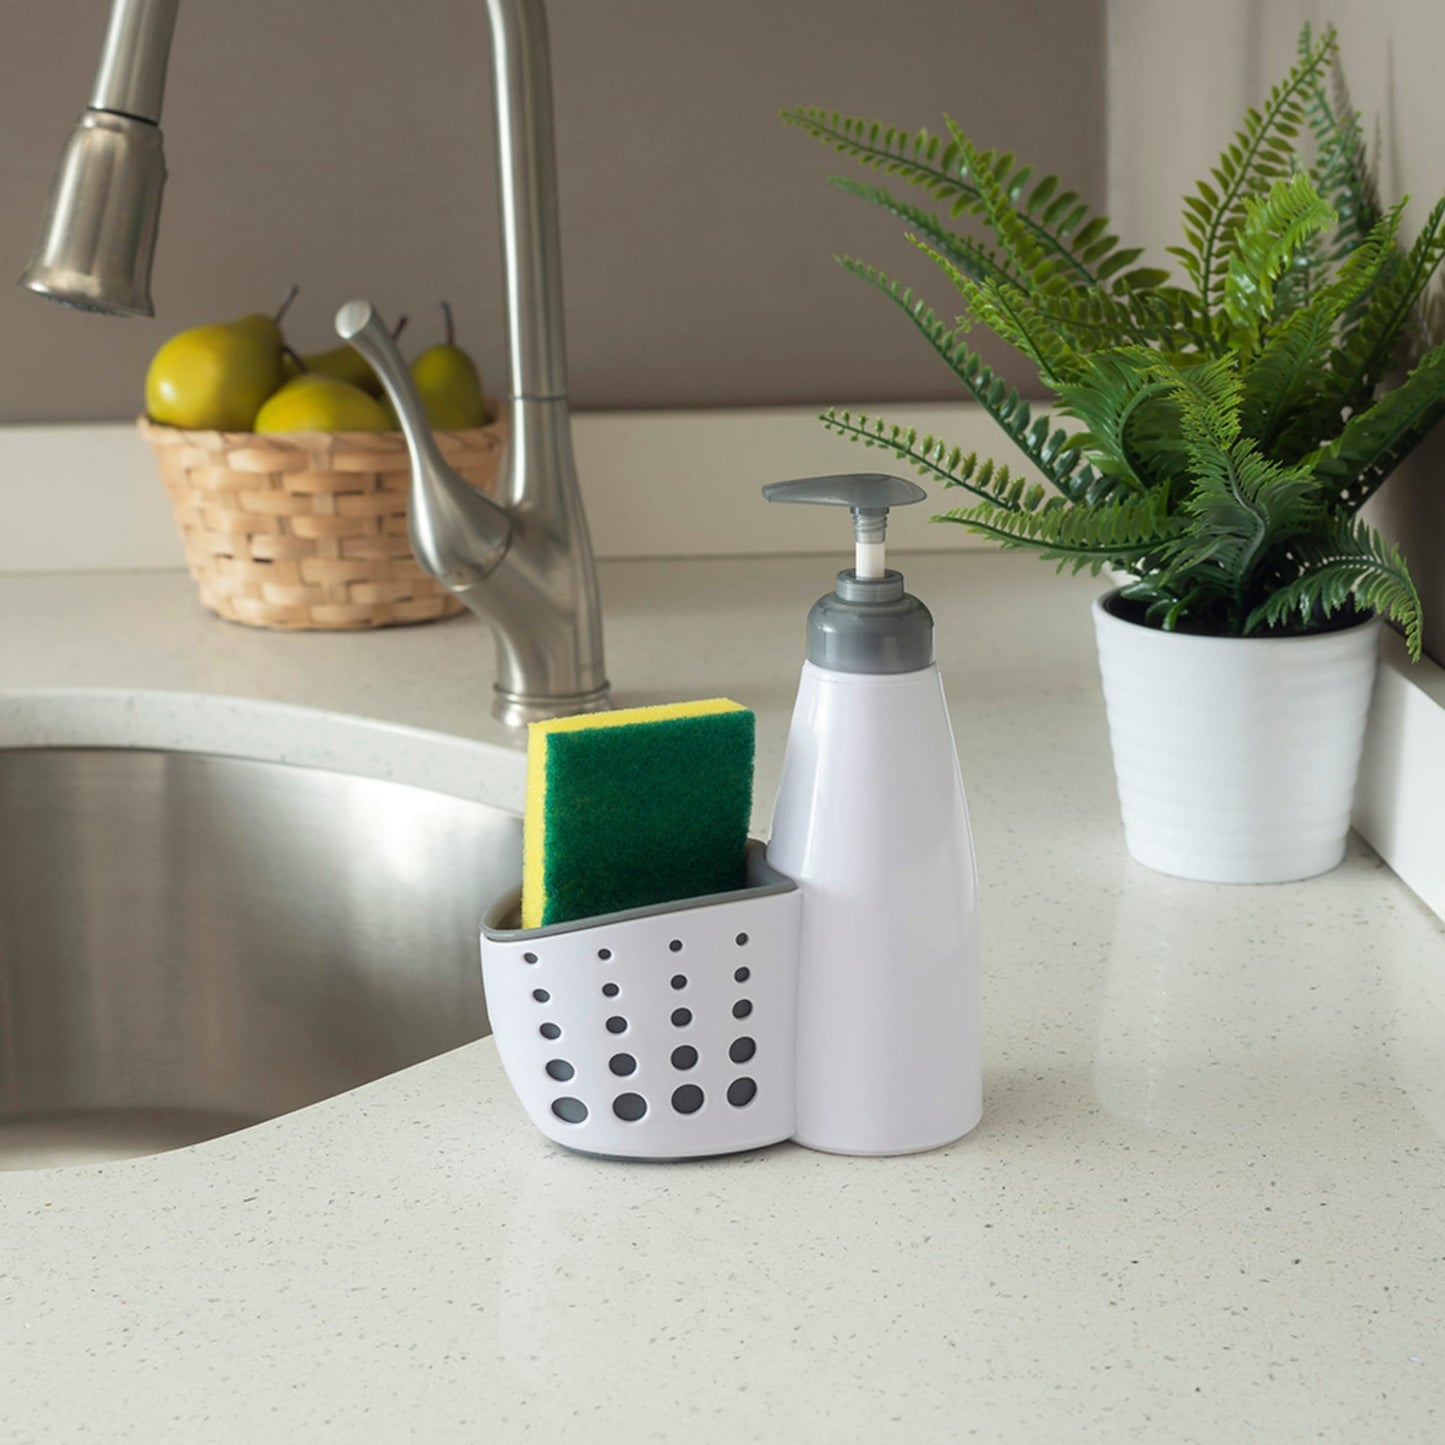 Soap Dispenser with Perforated Sponge Holder, White